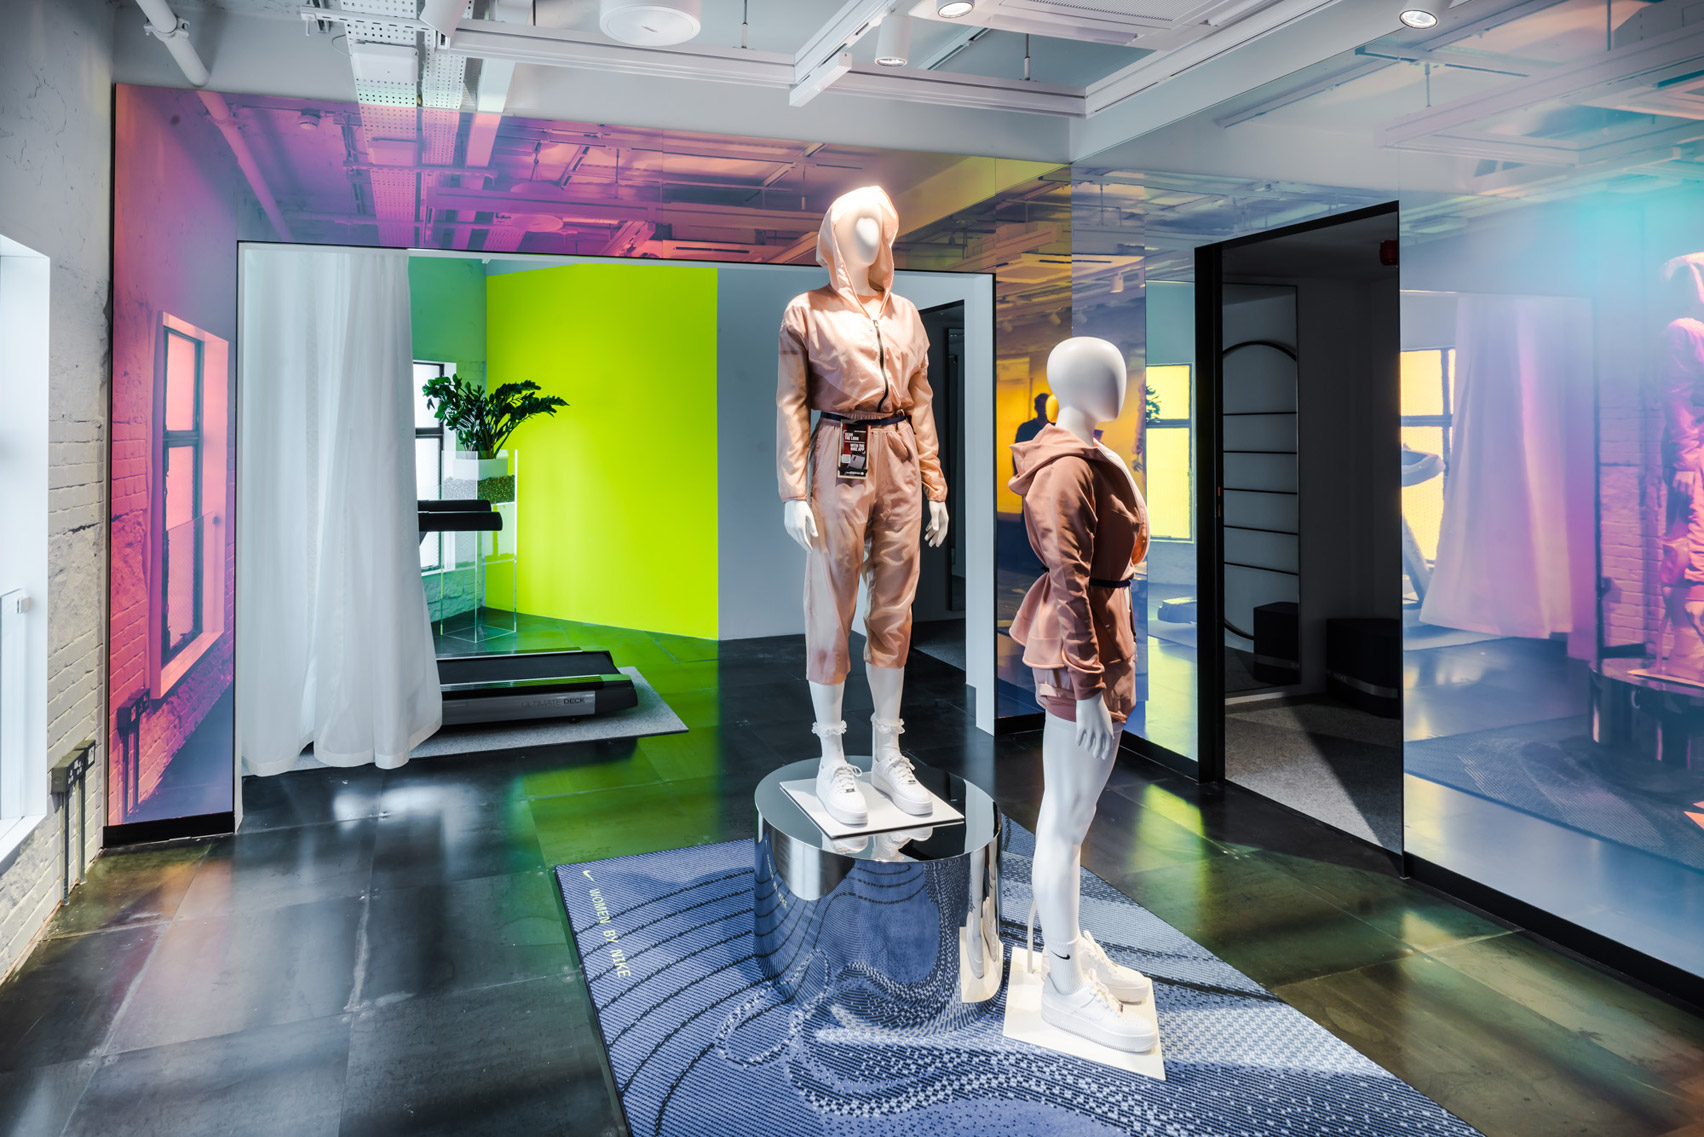 Schrijf op Habitat telex Nike adds plus-size mannequins to London Oxford Street store